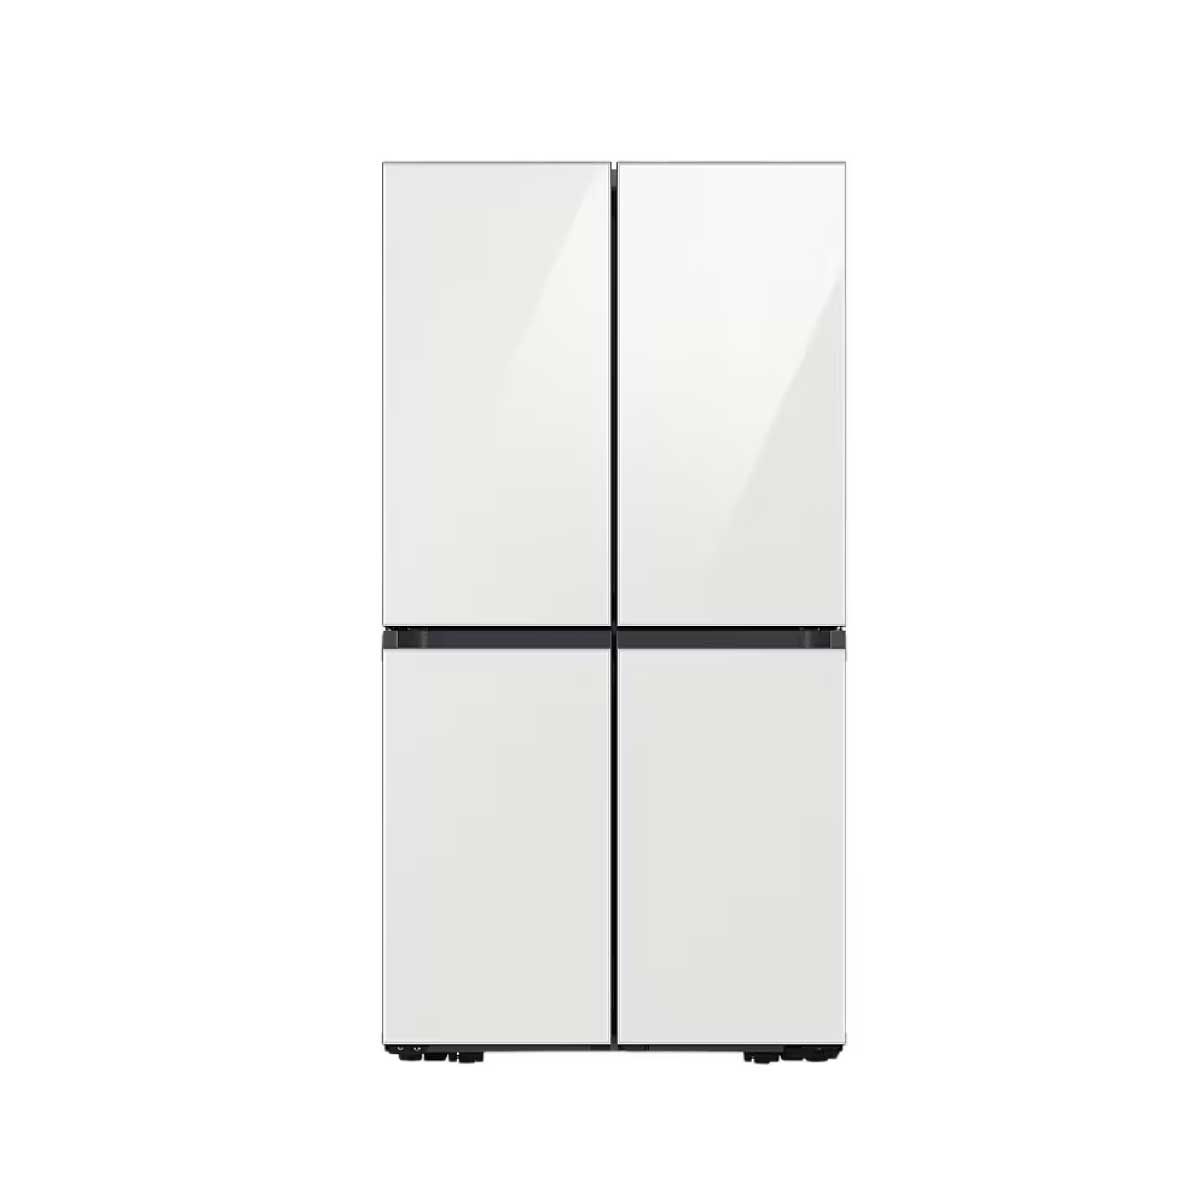 SAMSUNG ตู้เย็น French Door  Bespoke Design 22.7 Q / 649 L รุ่น RF59CB001AP/ST สี ขาว/ขาว